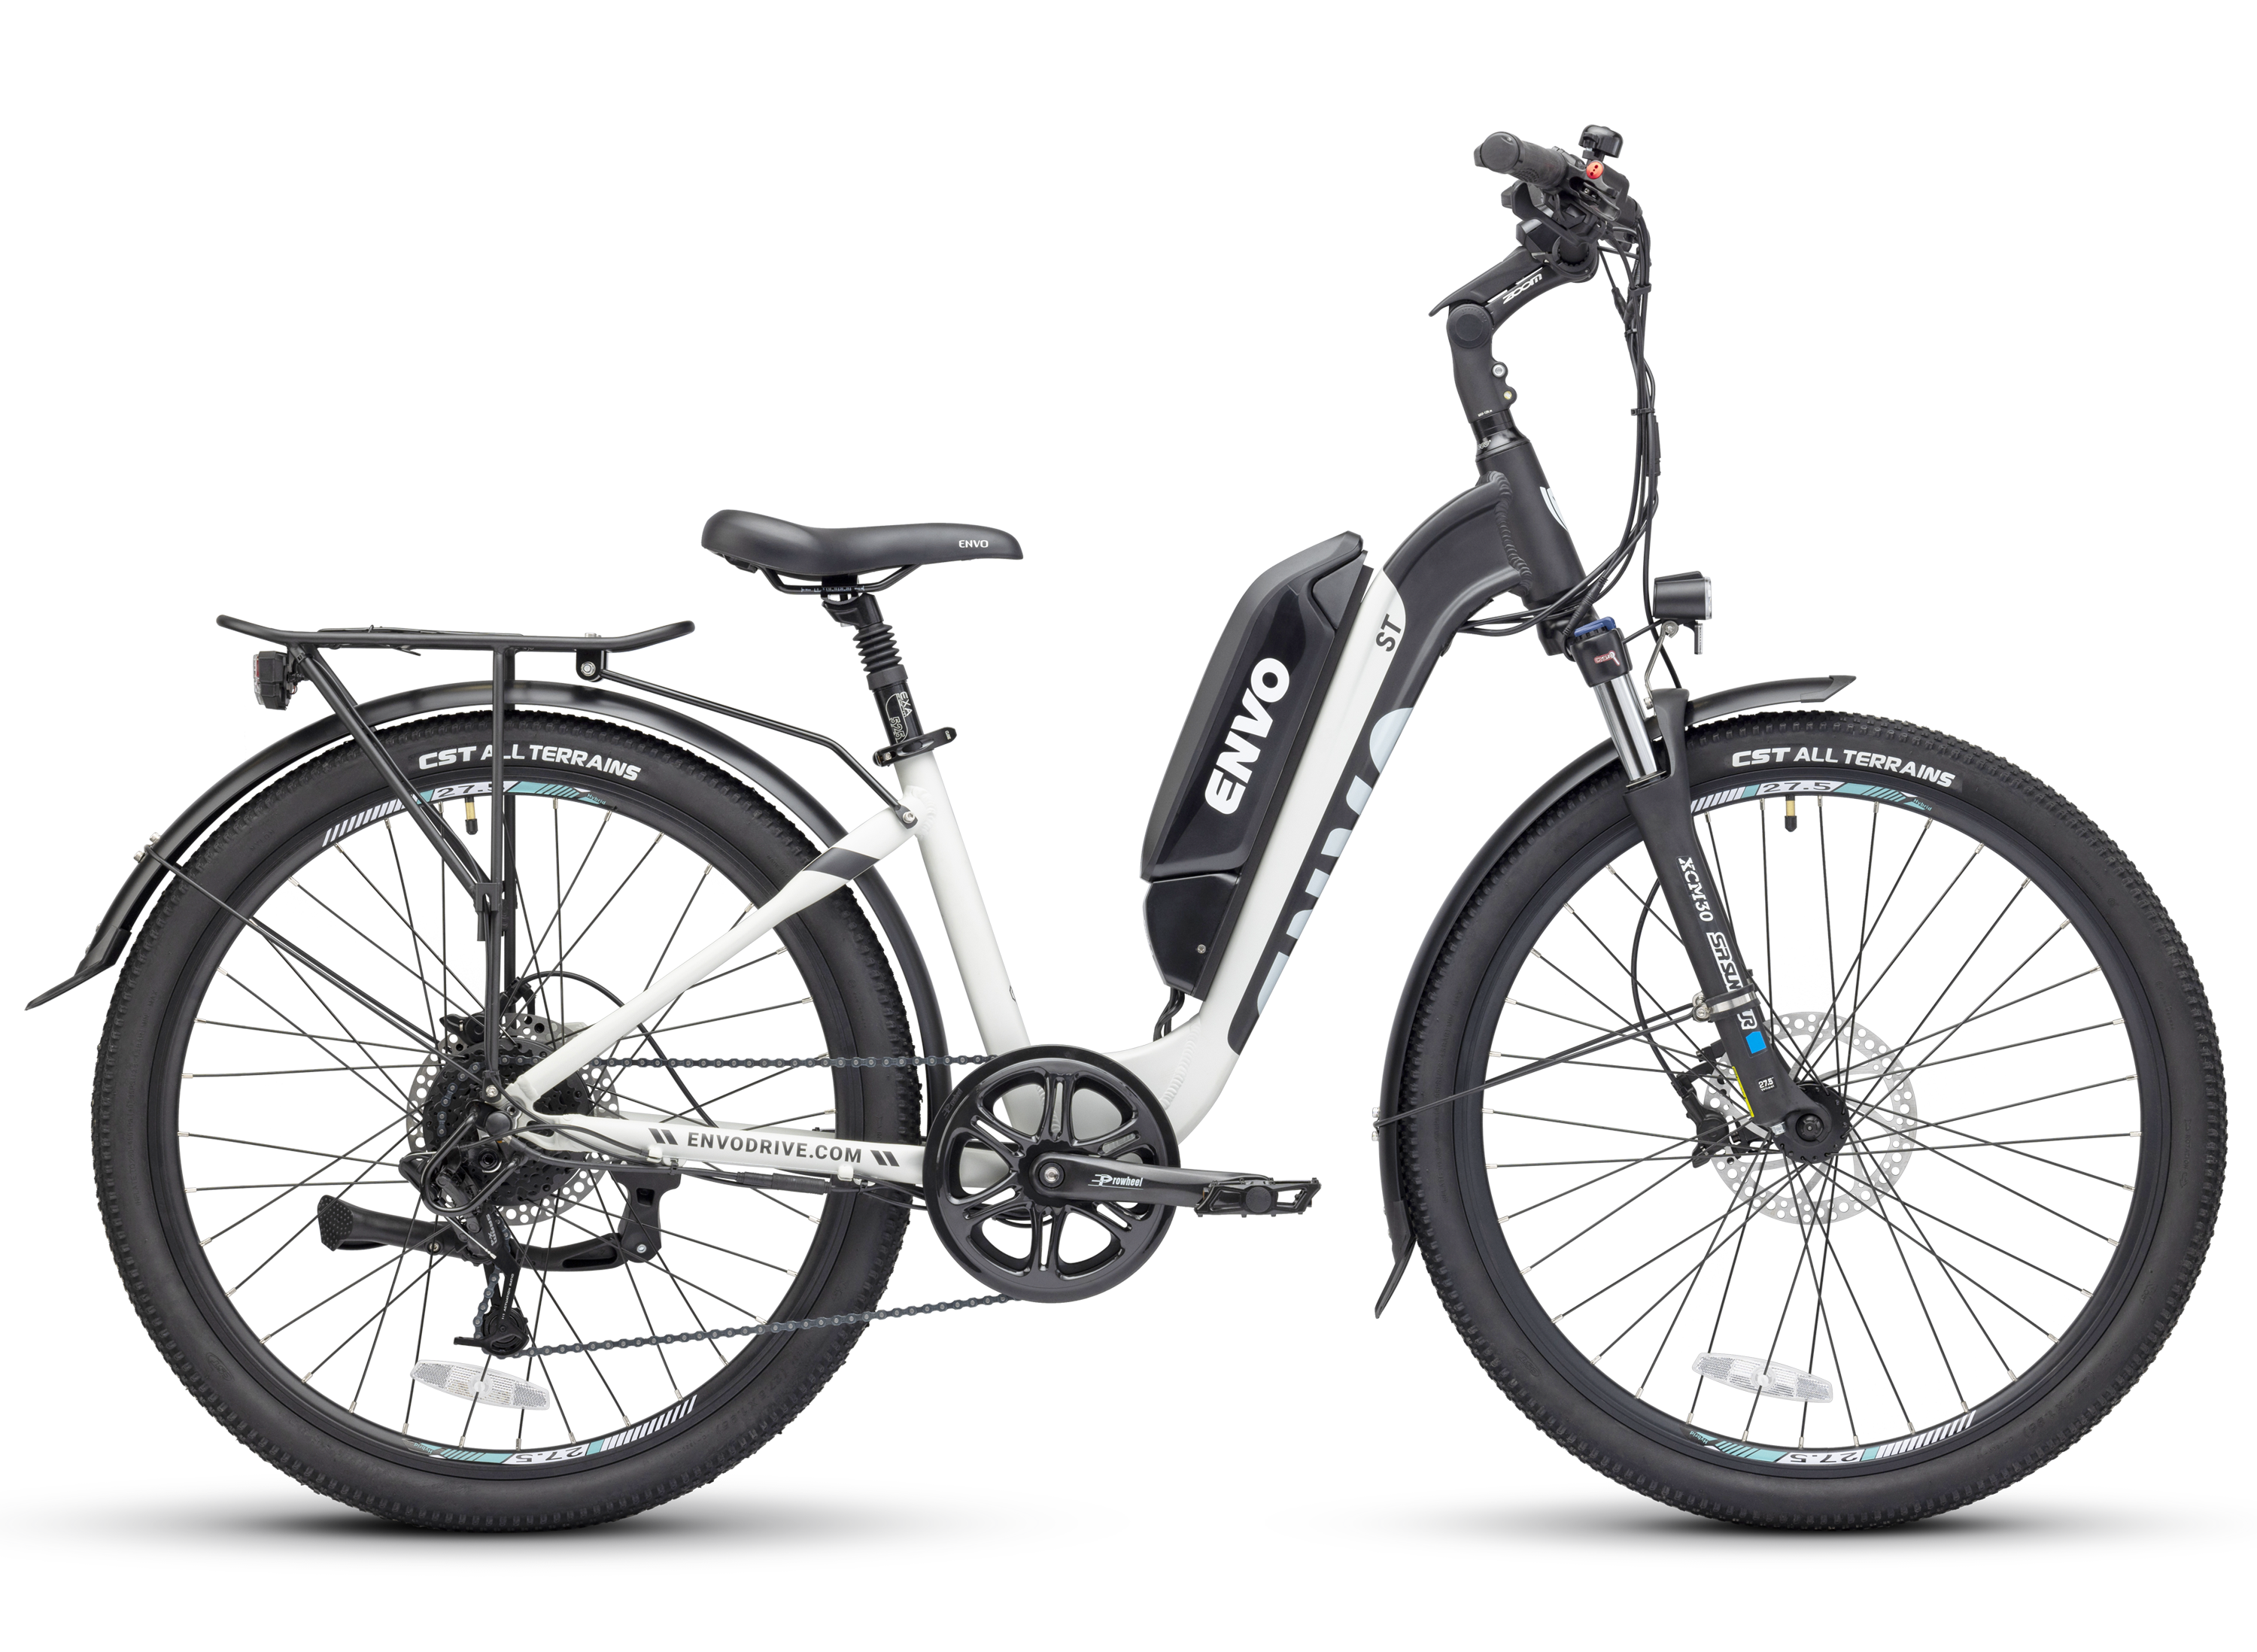 ENVO ST Electric Bike | Envodrive